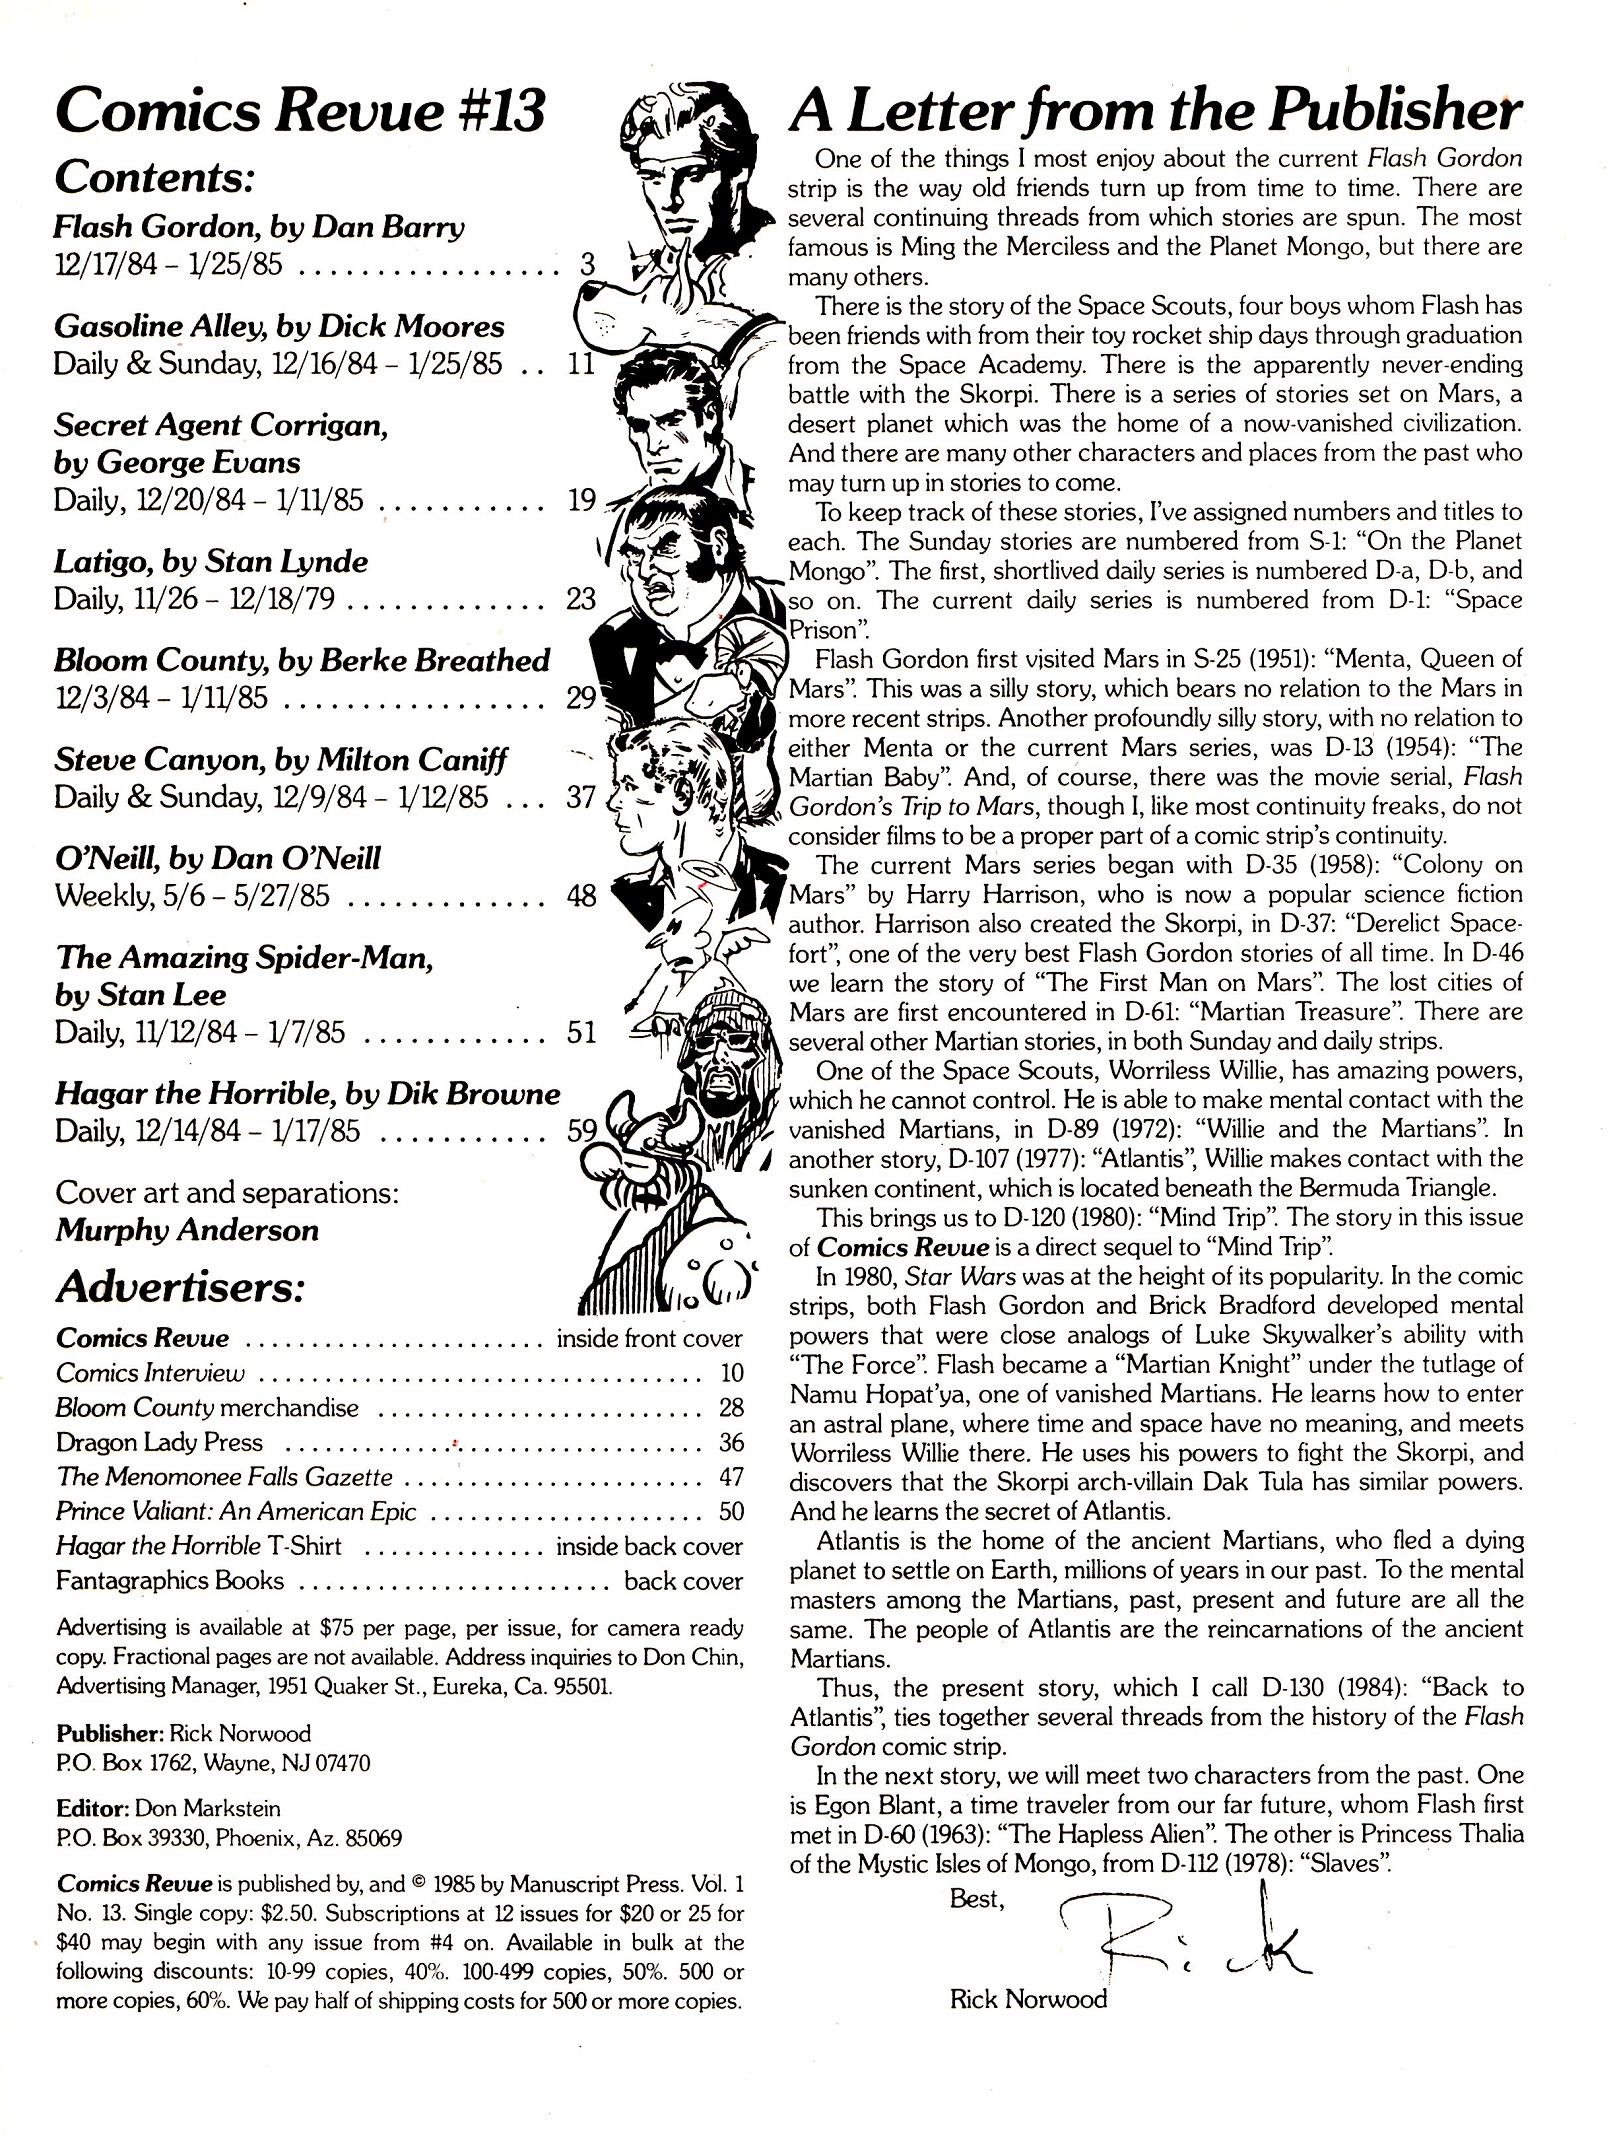 Read online Comics Revue comic -  Issue #13 - 3